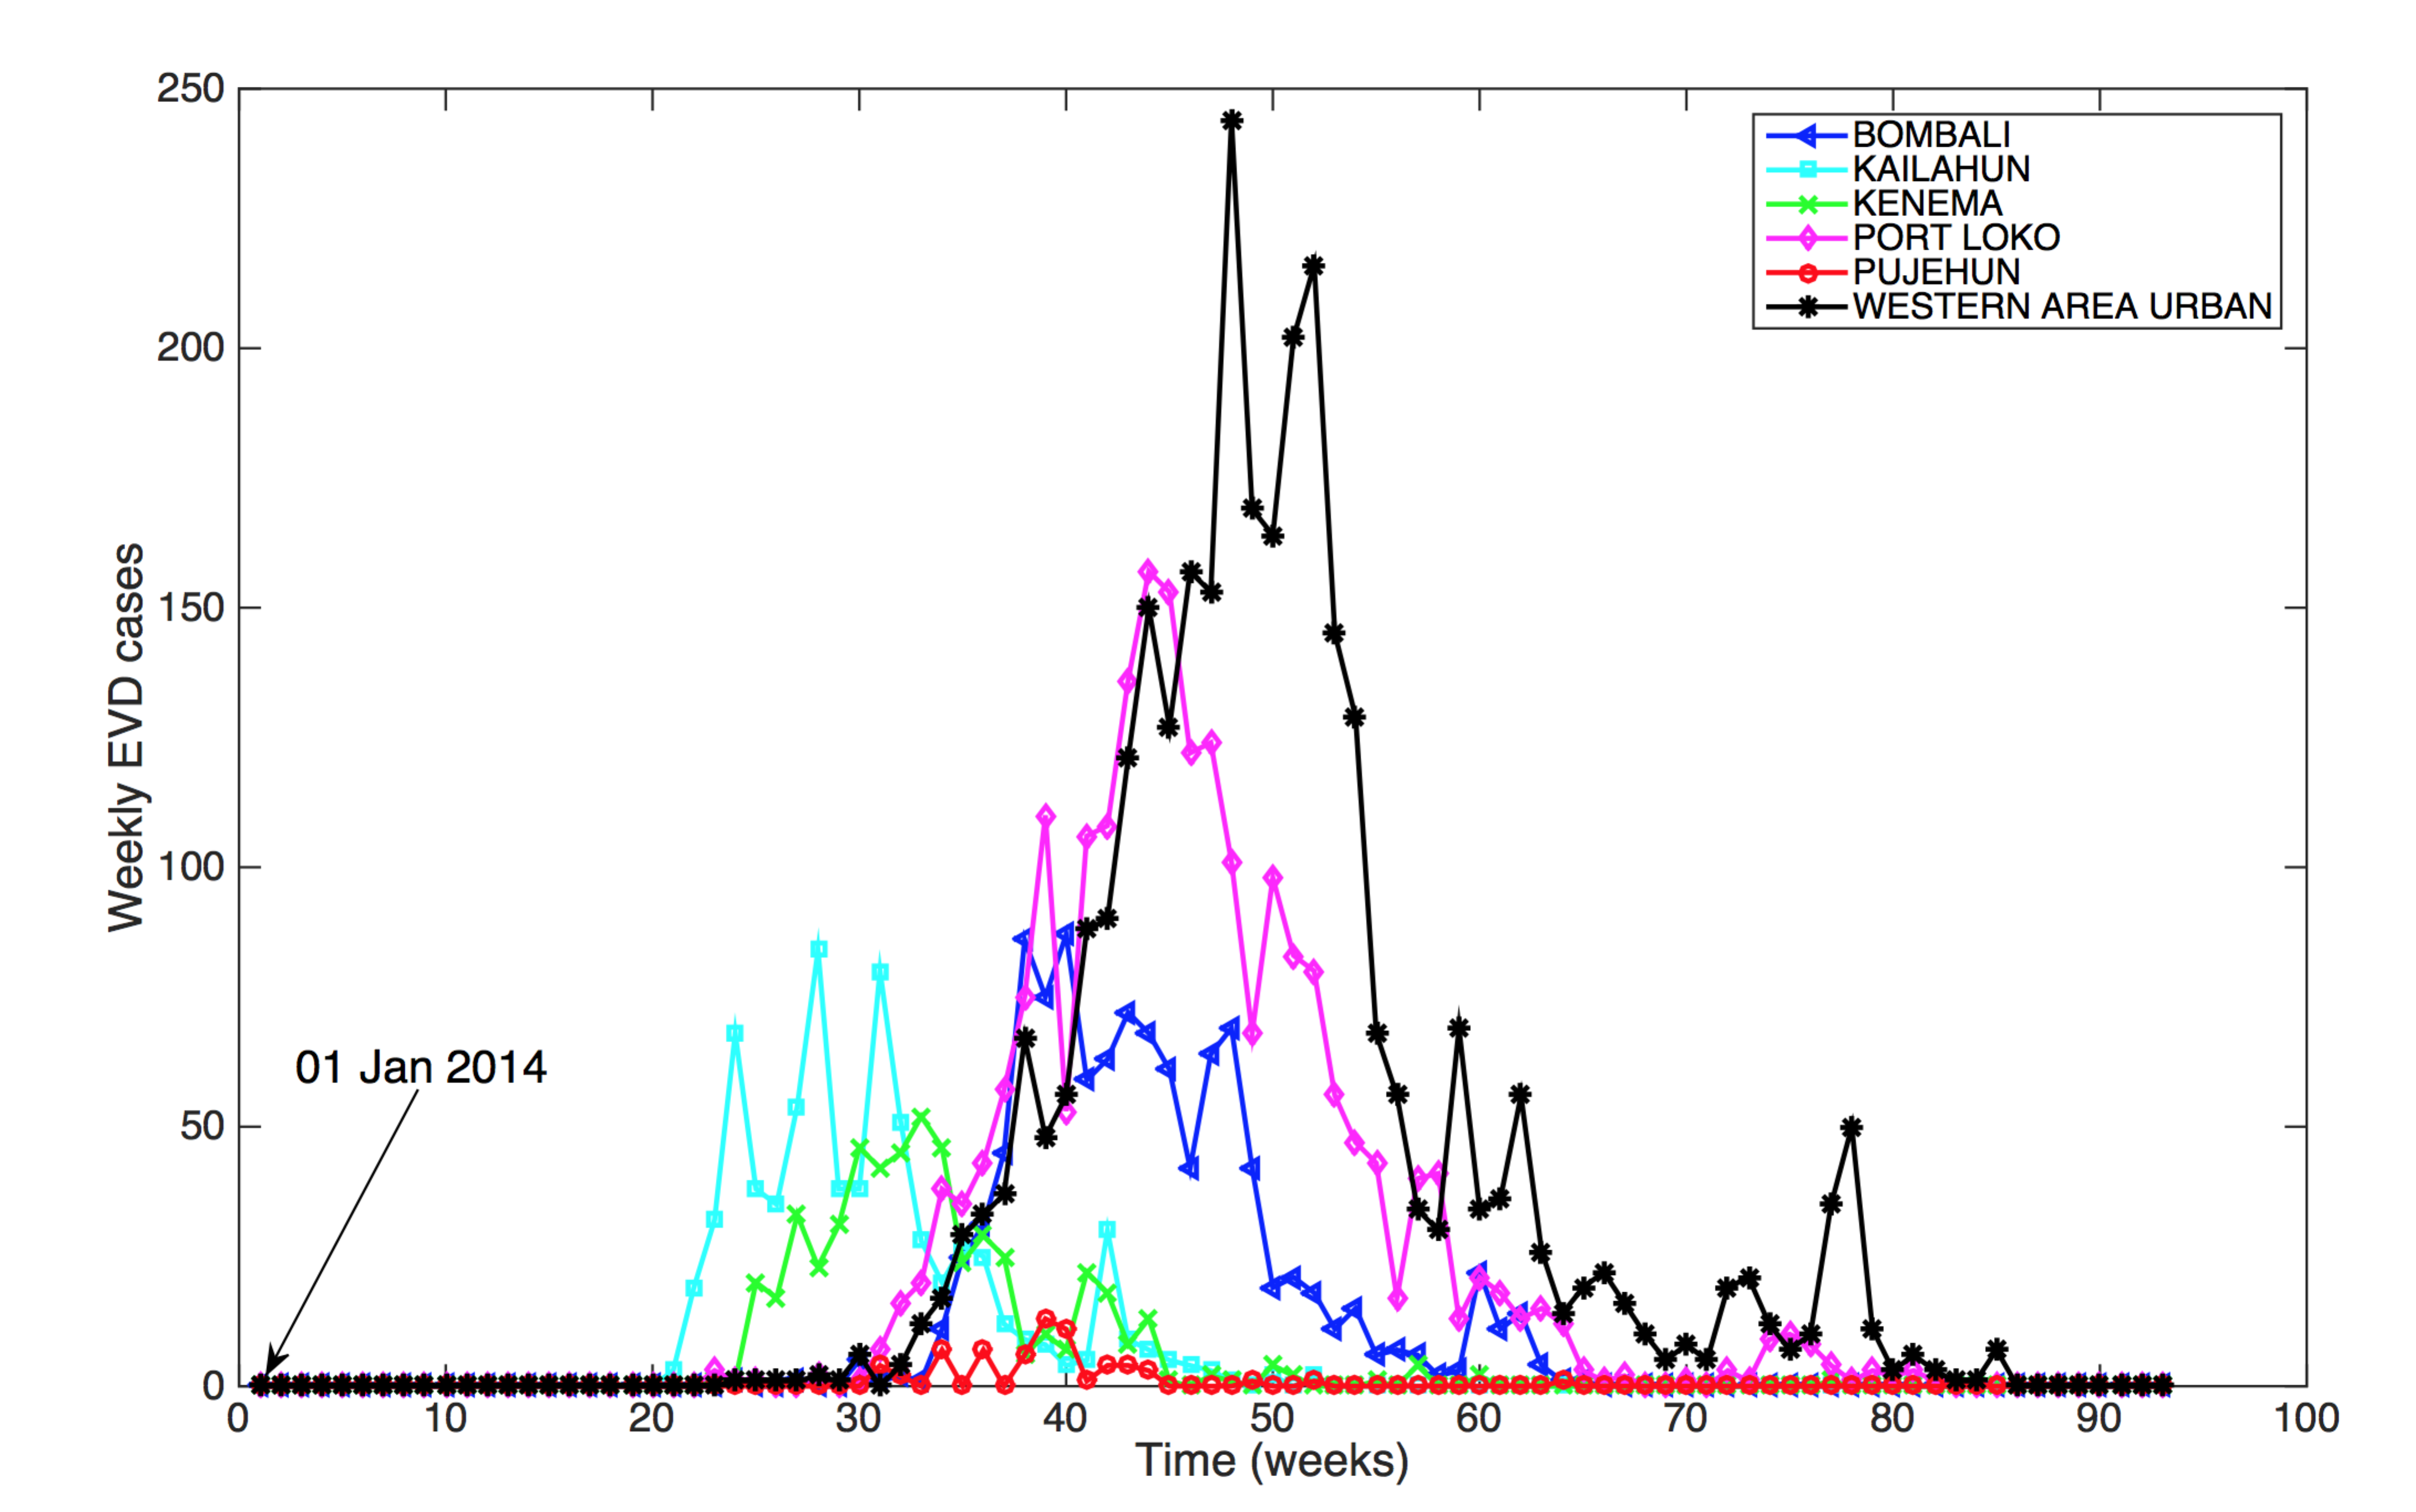 The temporal progression of the Ebola epidemic in representative districts of Sierra Leone